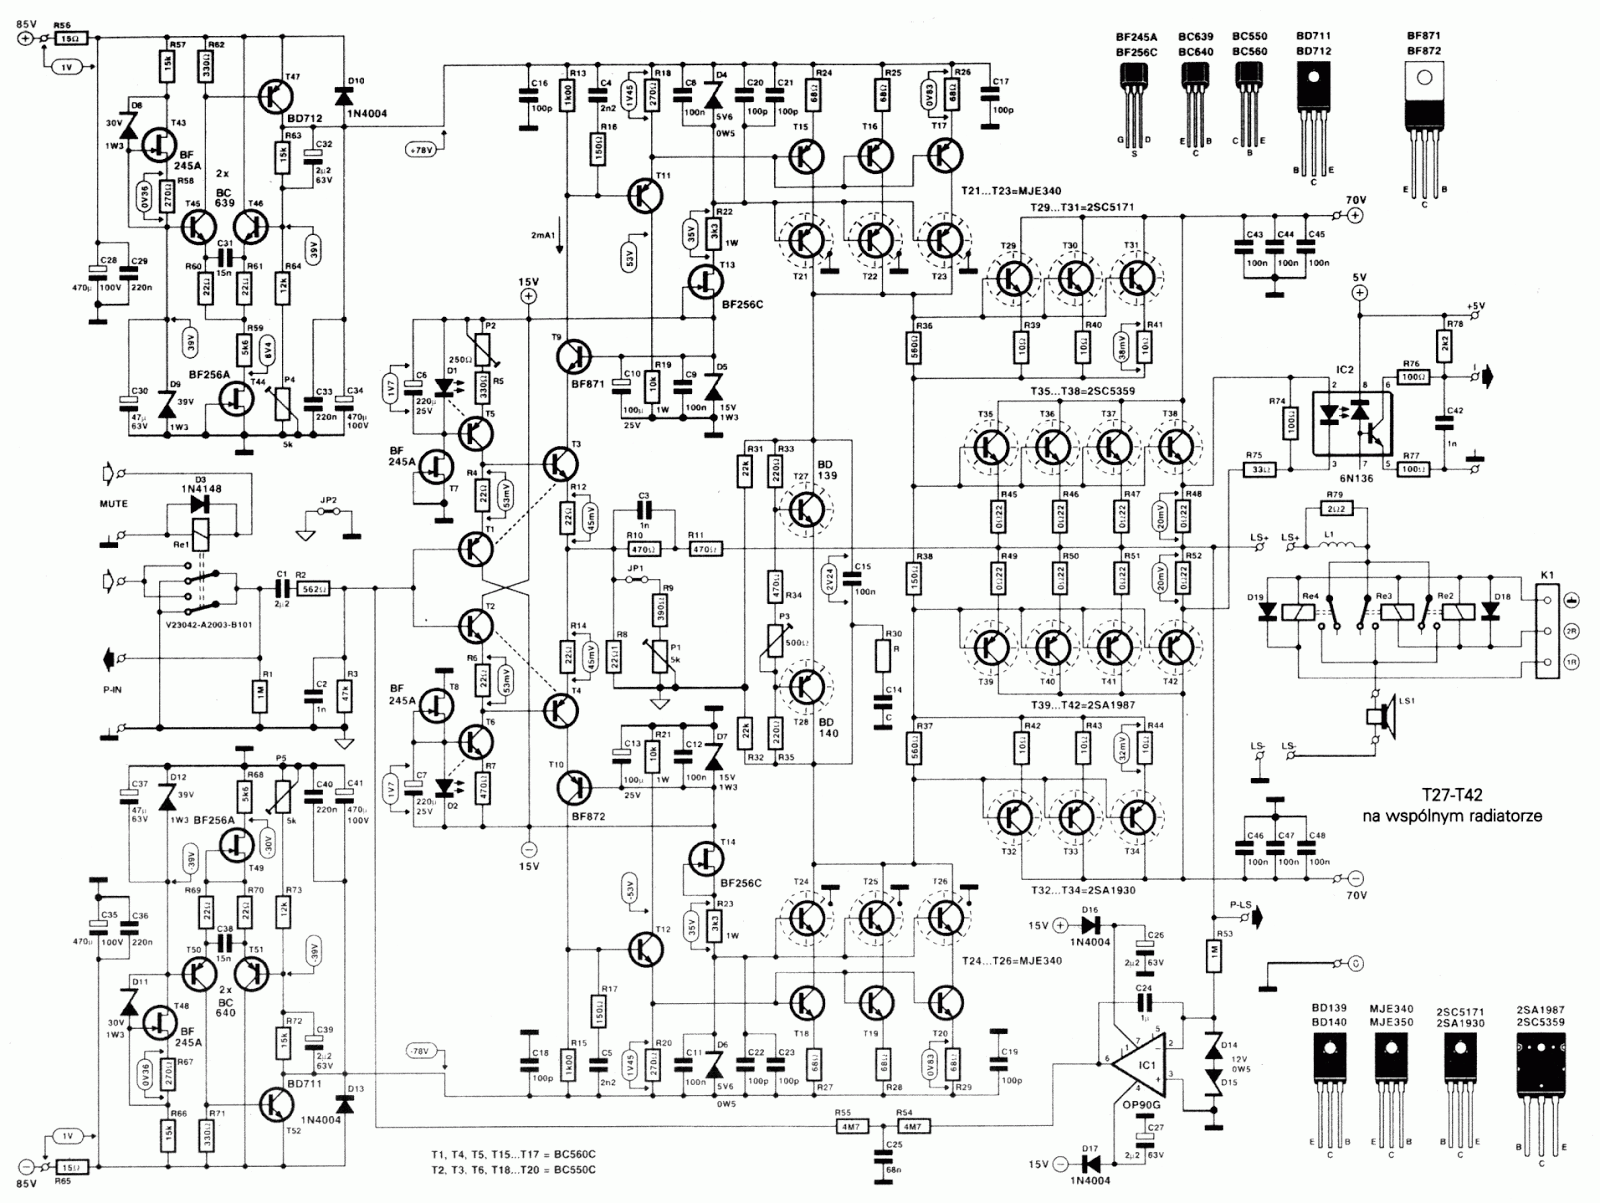 20.000 Watt Audio Amplifier, Scheme collections circuit schematic with